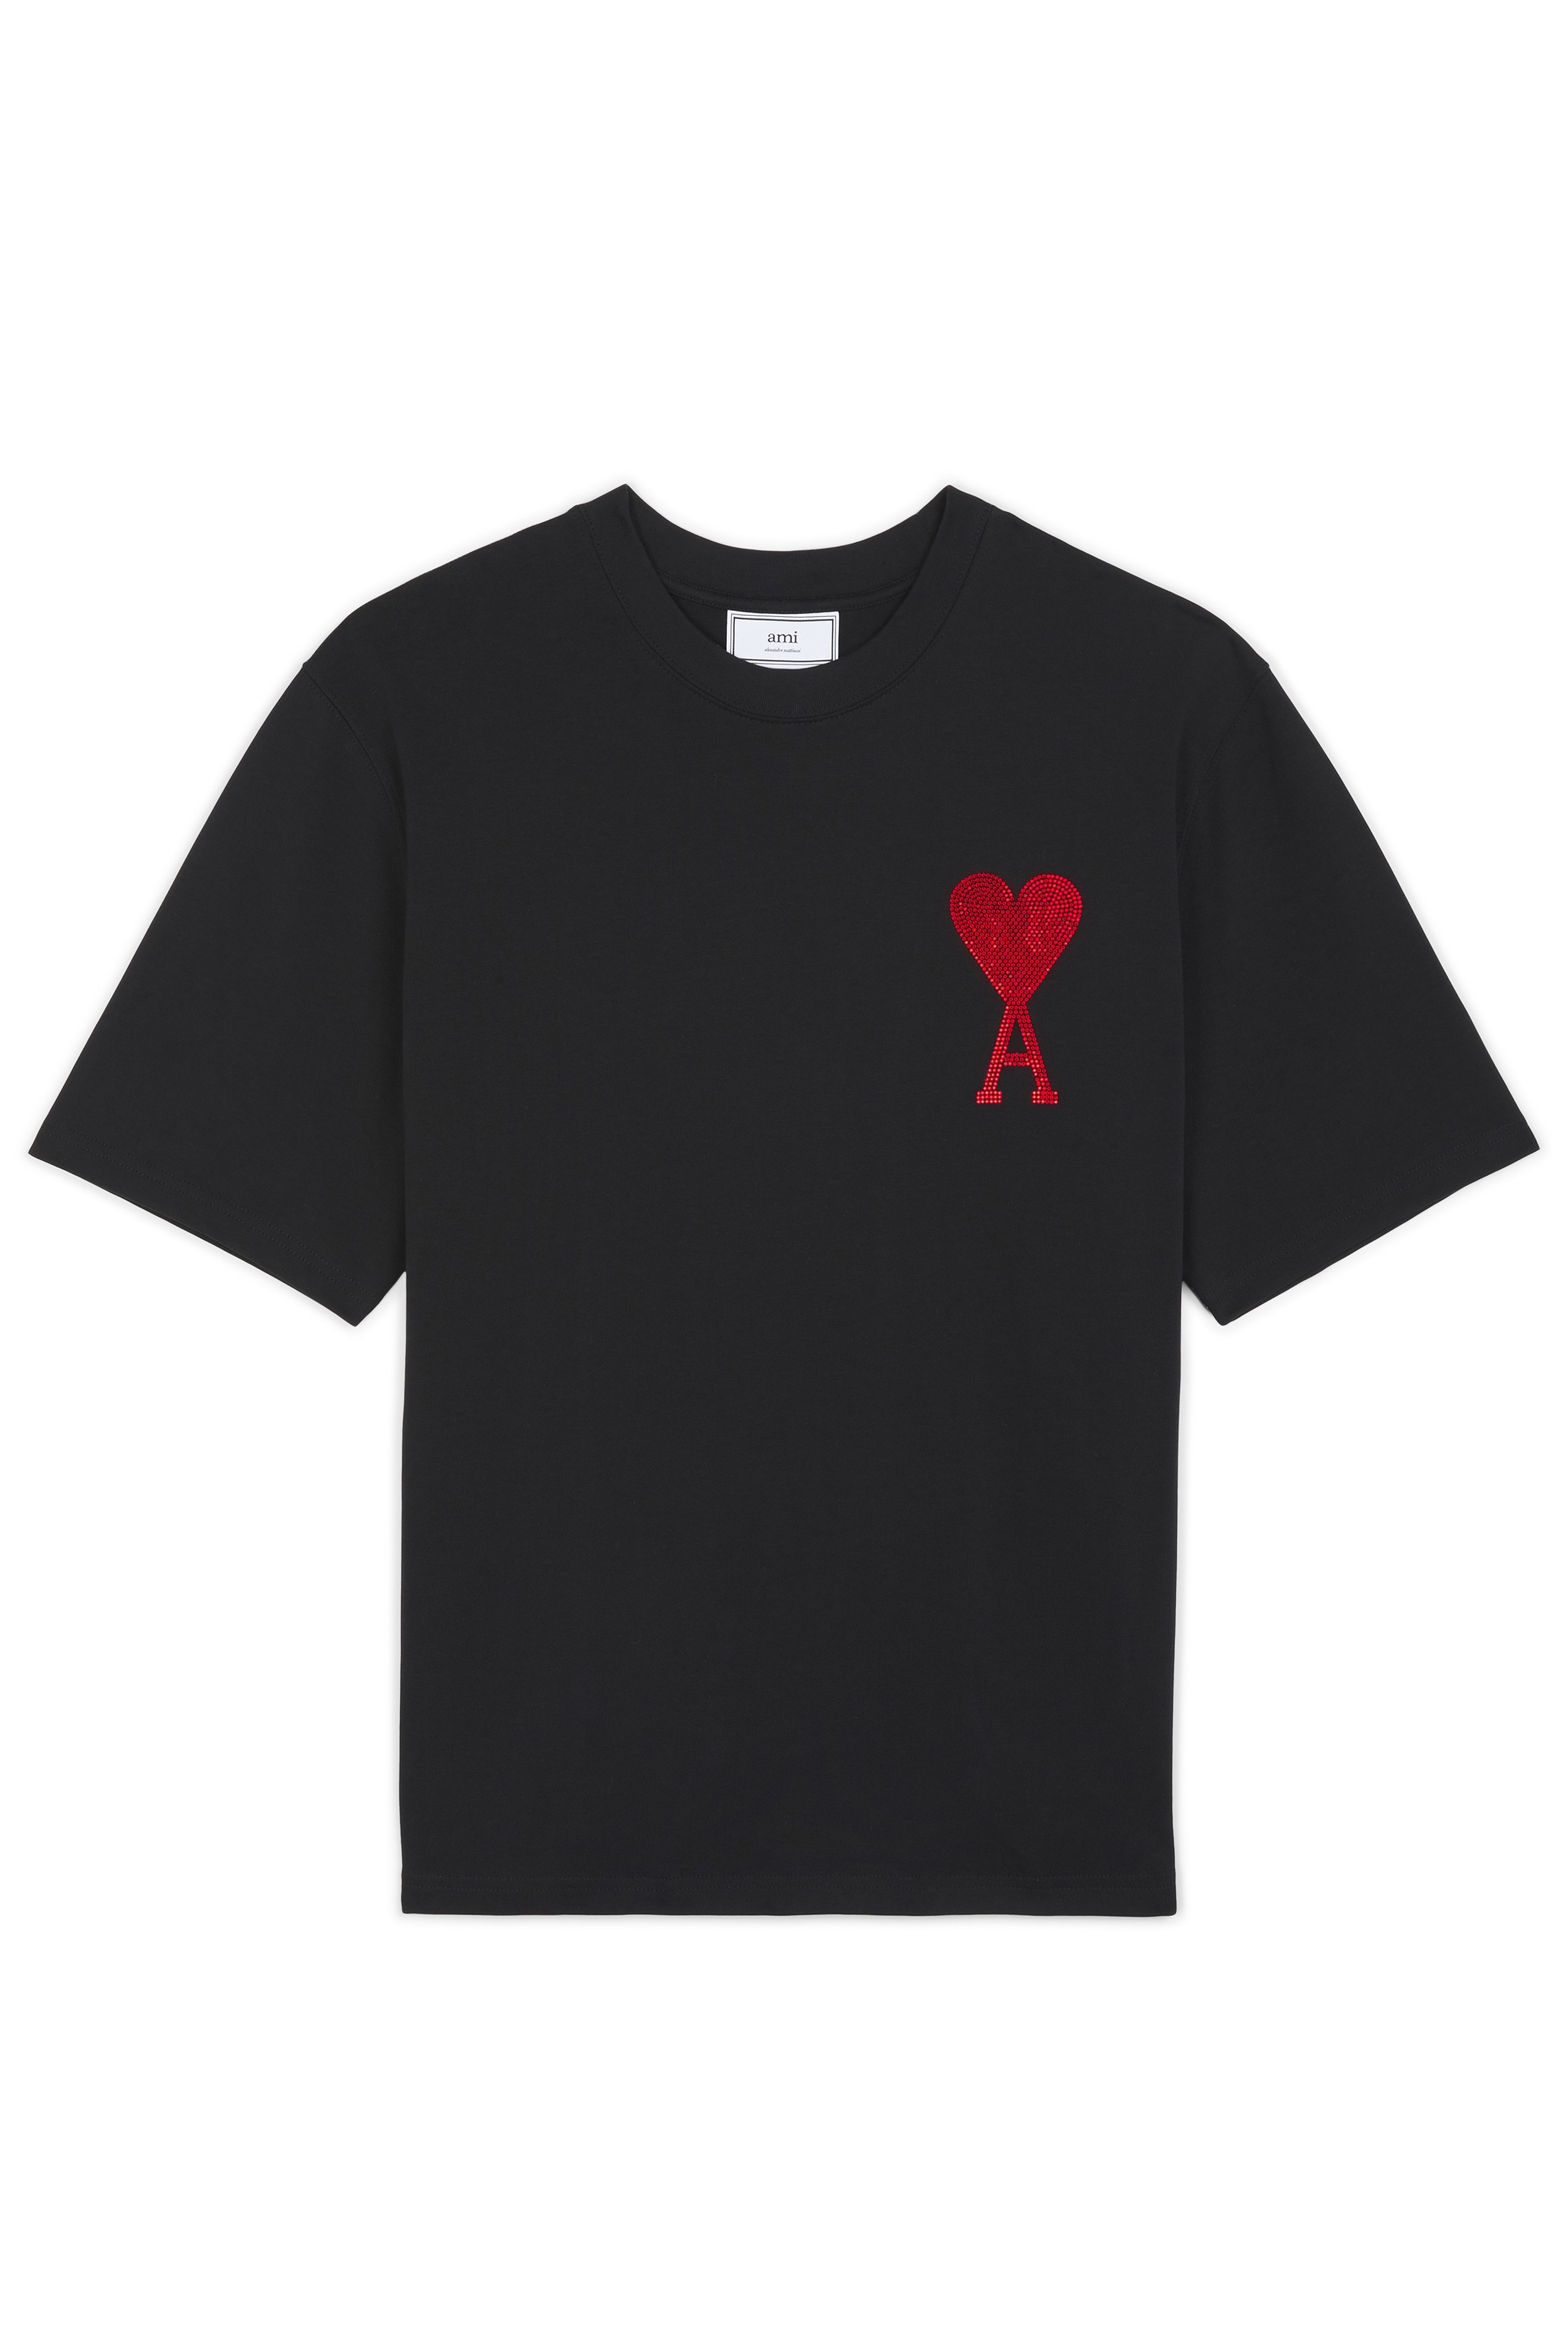 Ami de Coeur Shanghai Collection Release Red Swarovski Crystals hoodies shirts tee T-Shirts Sweatshirts black 